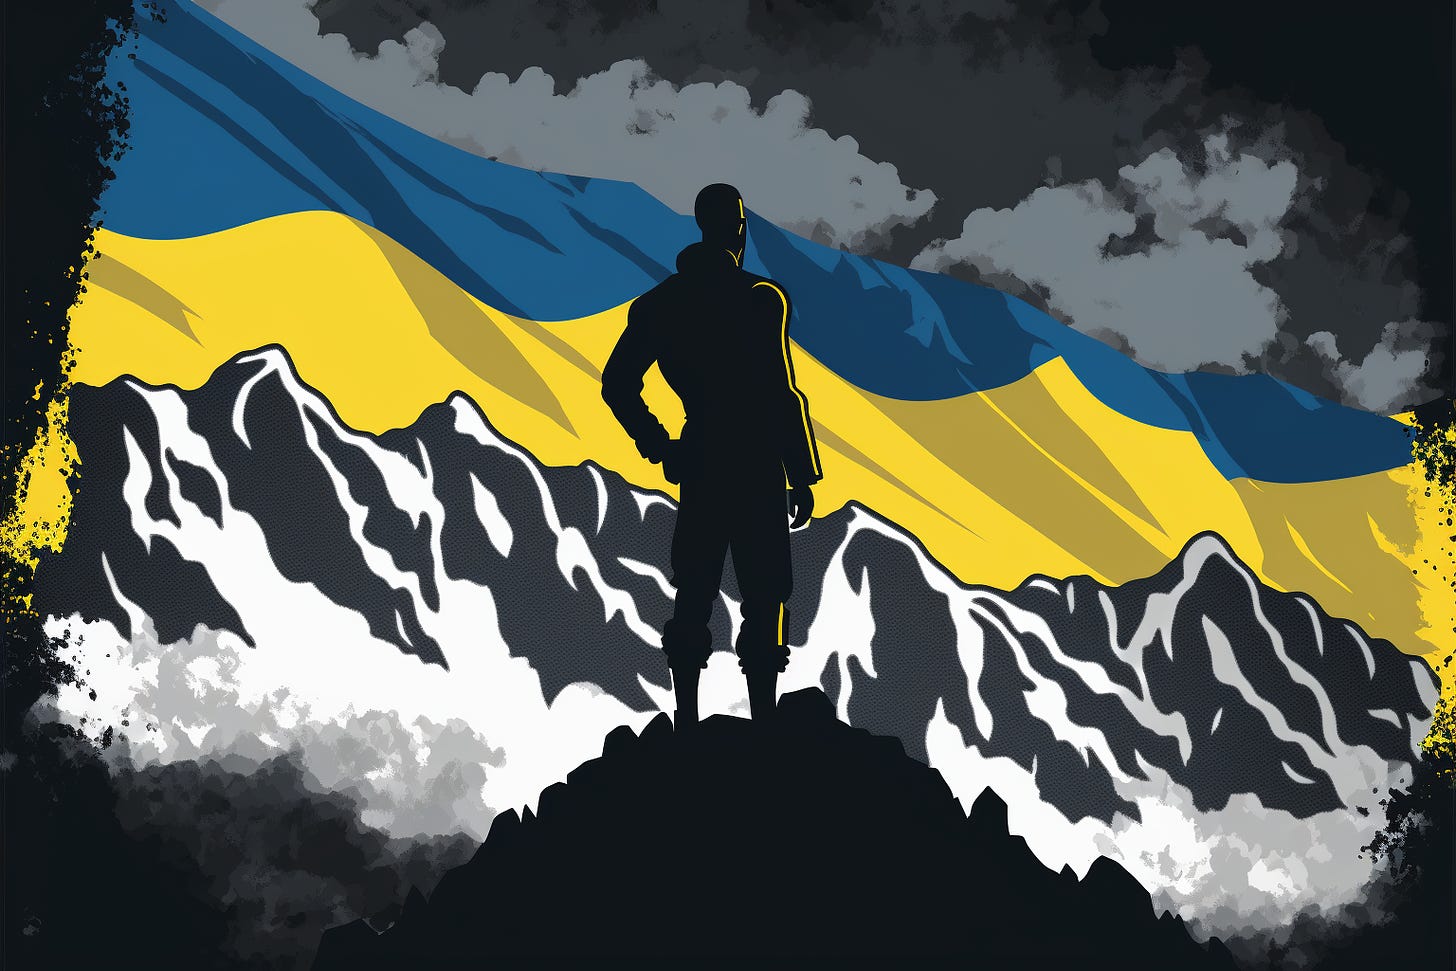 a Ukrainian flag against a silhouette of a mountain range, graphic novel